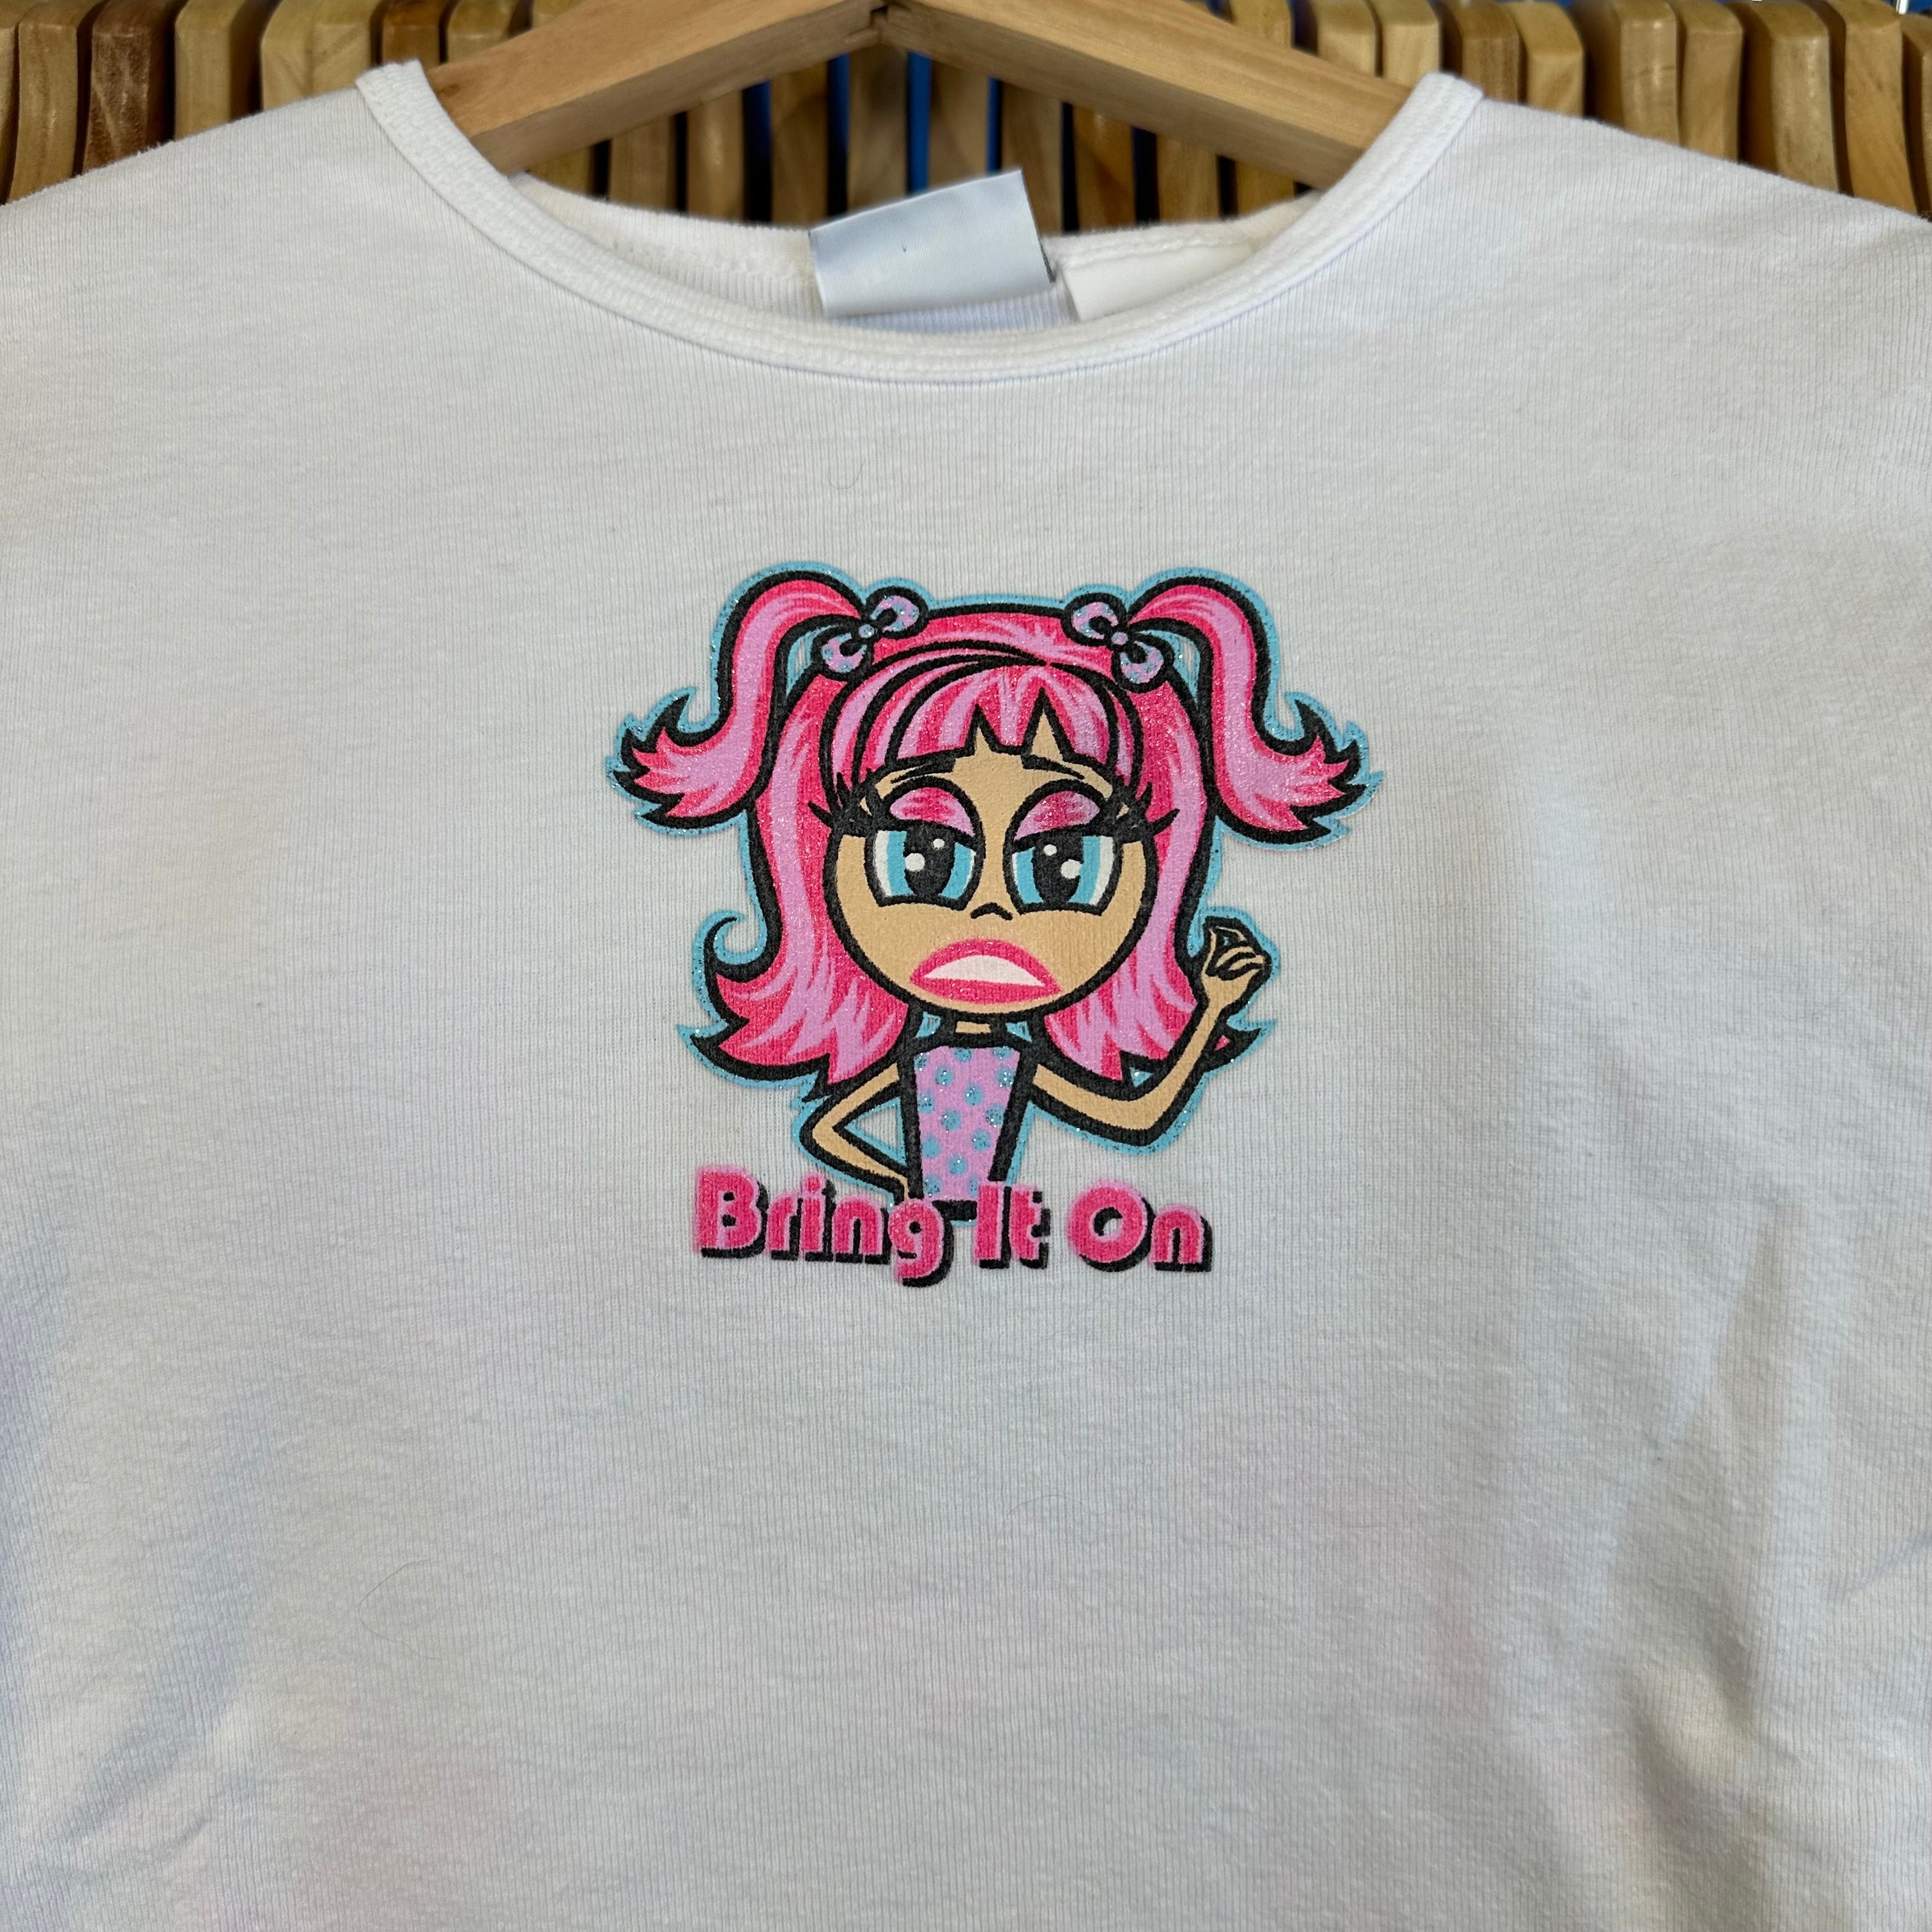 Bring It On Femme T-Shirt